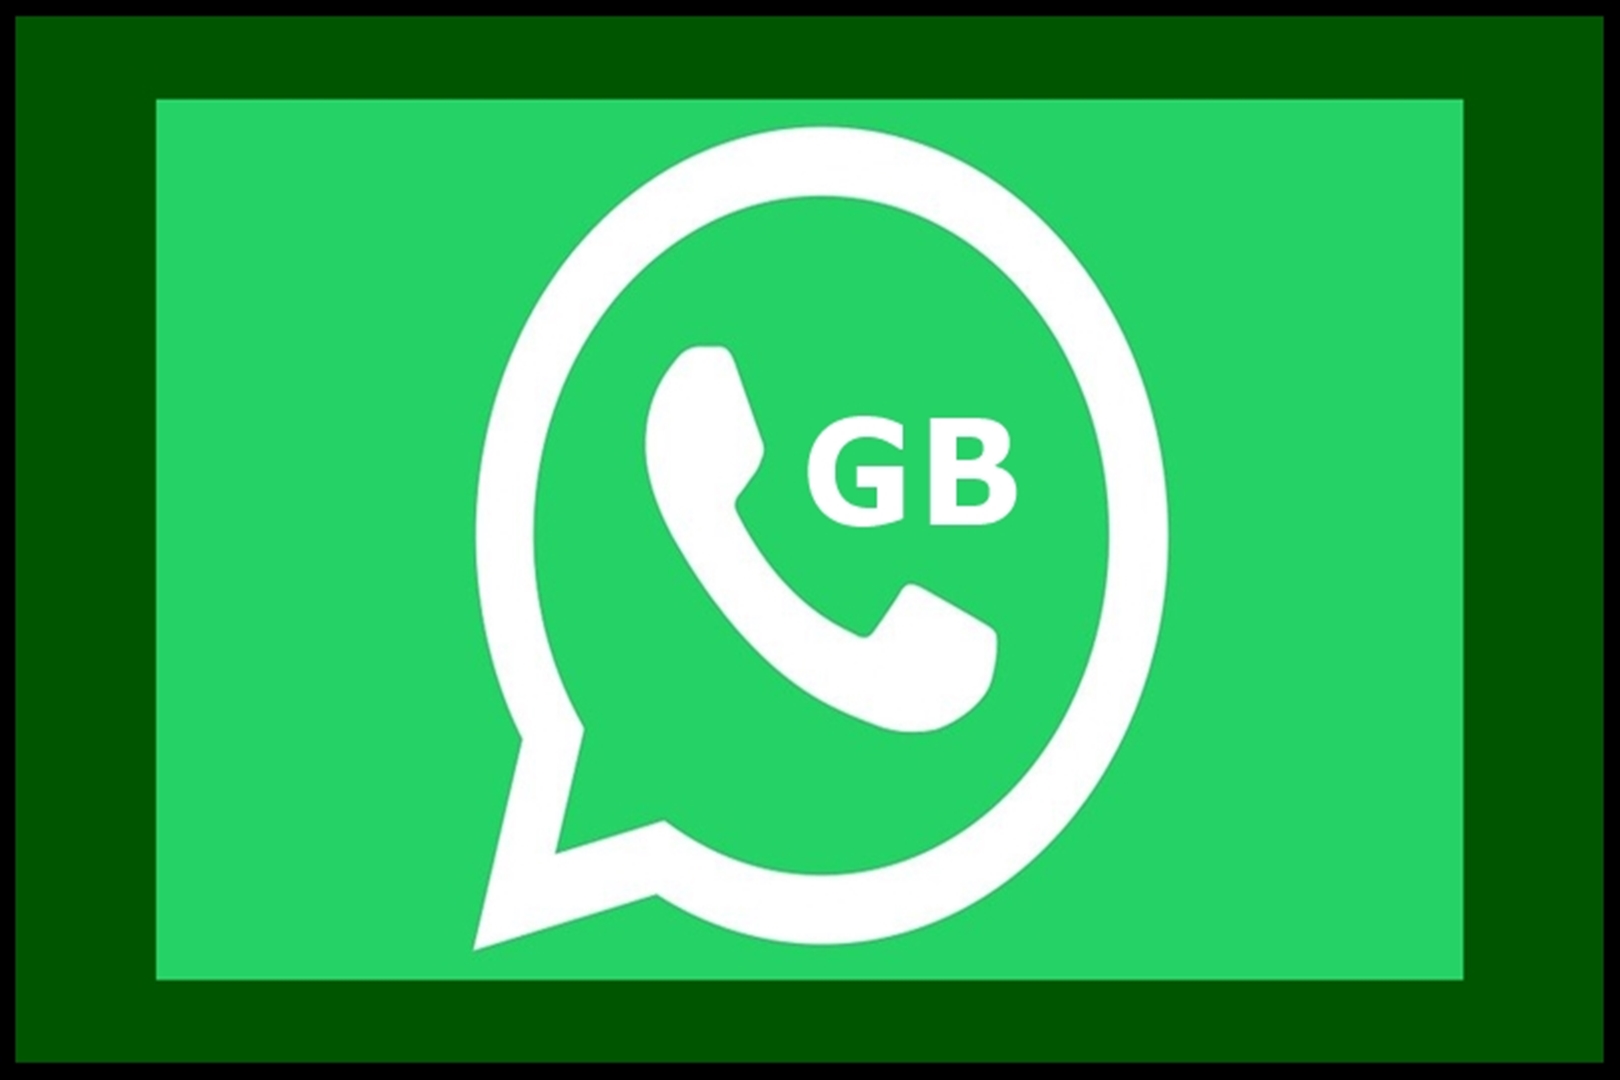 Link Download GB Whatsapp Pro Terupdate, Nikmati Fitur Penjadwalan Pesan dan Balas Pesan Otomatis!